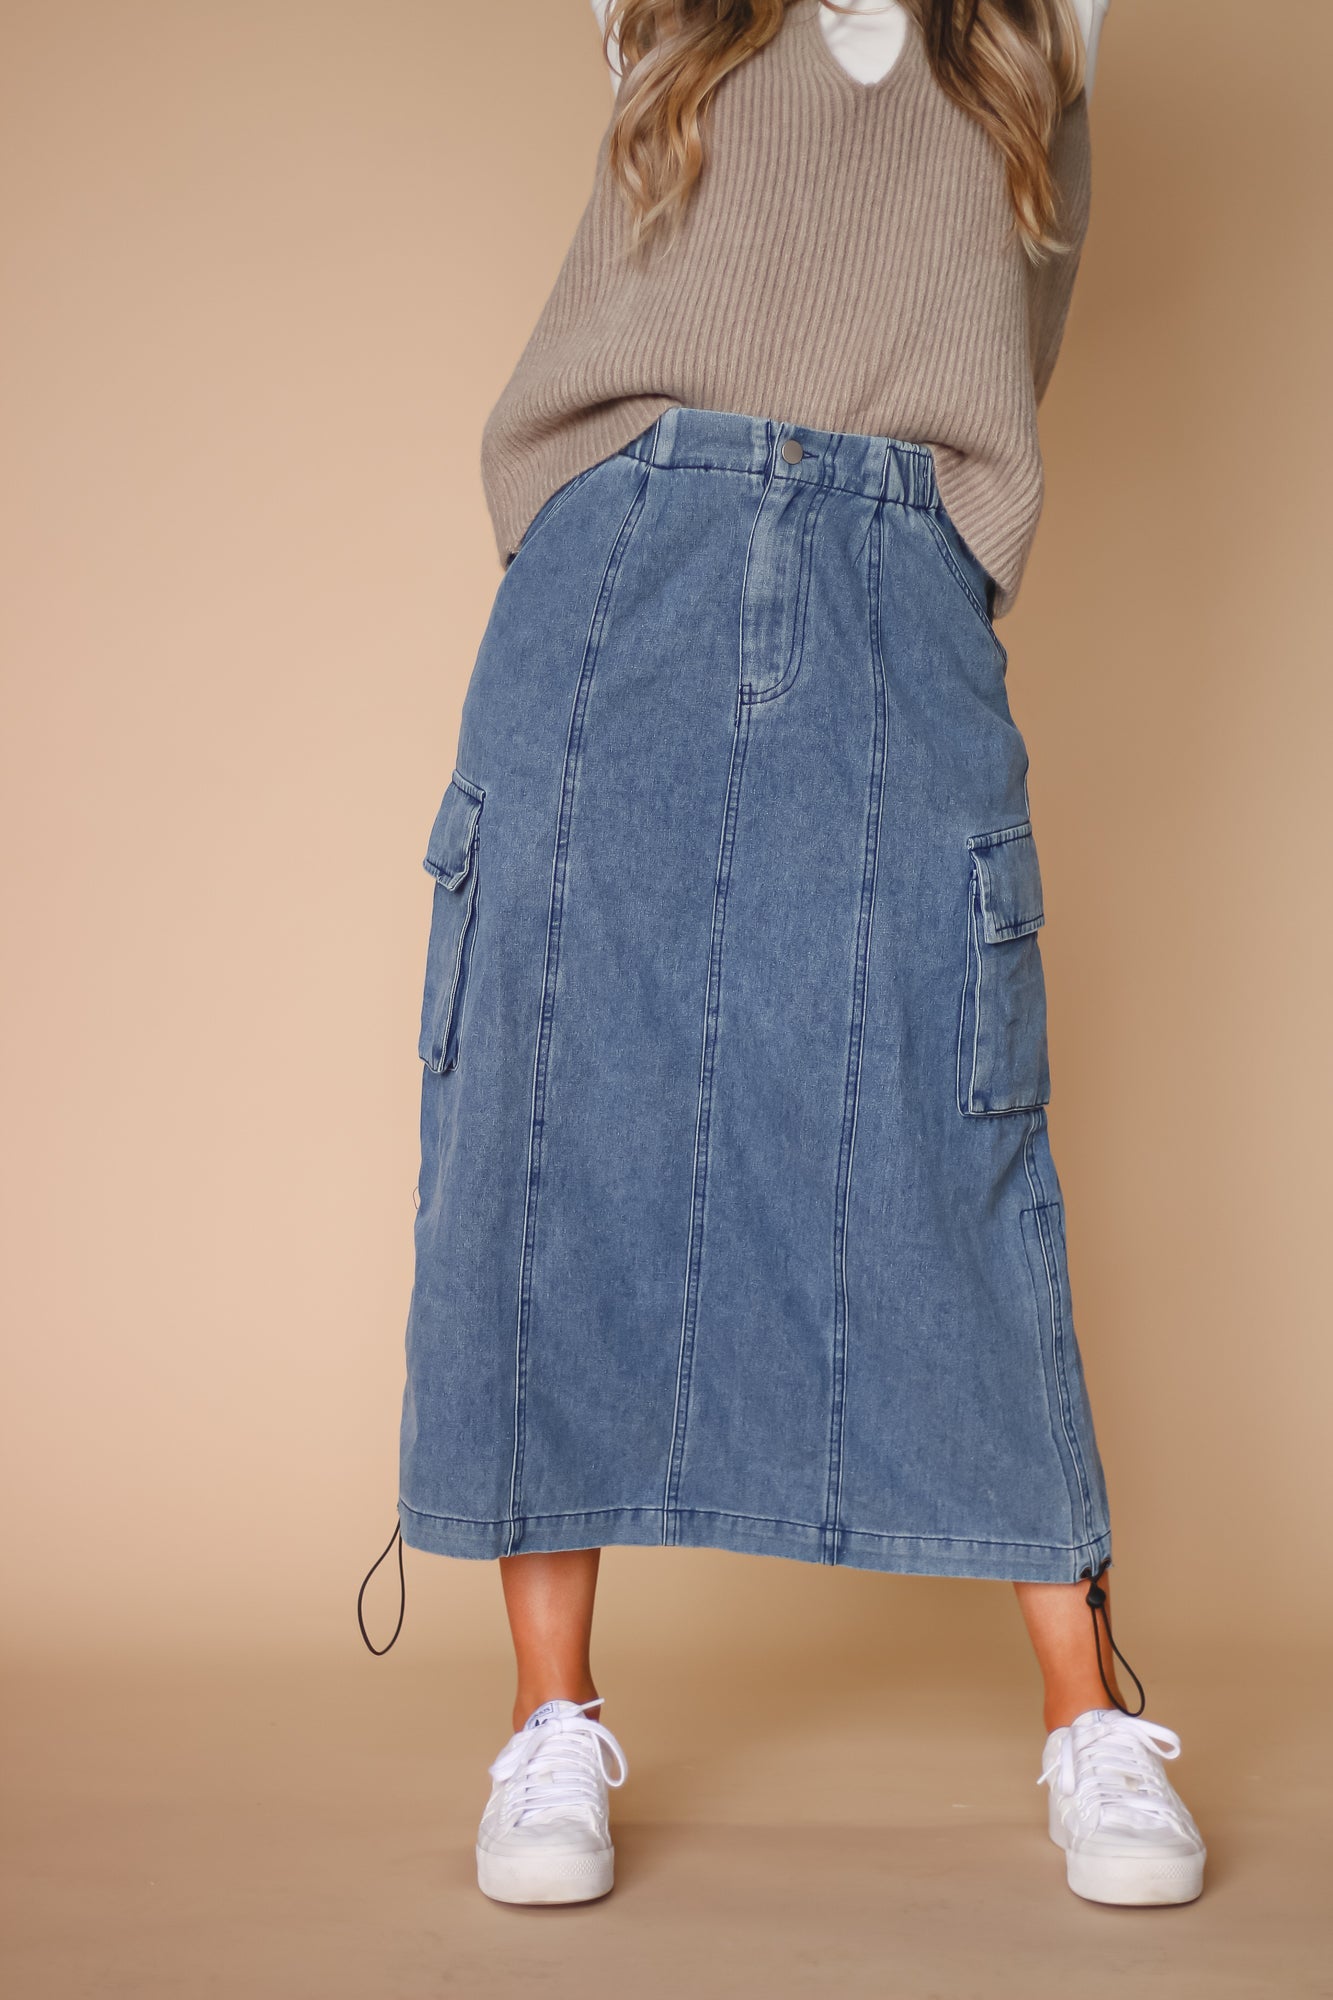 Topshop high waist denim skirt in pebble | ASOS